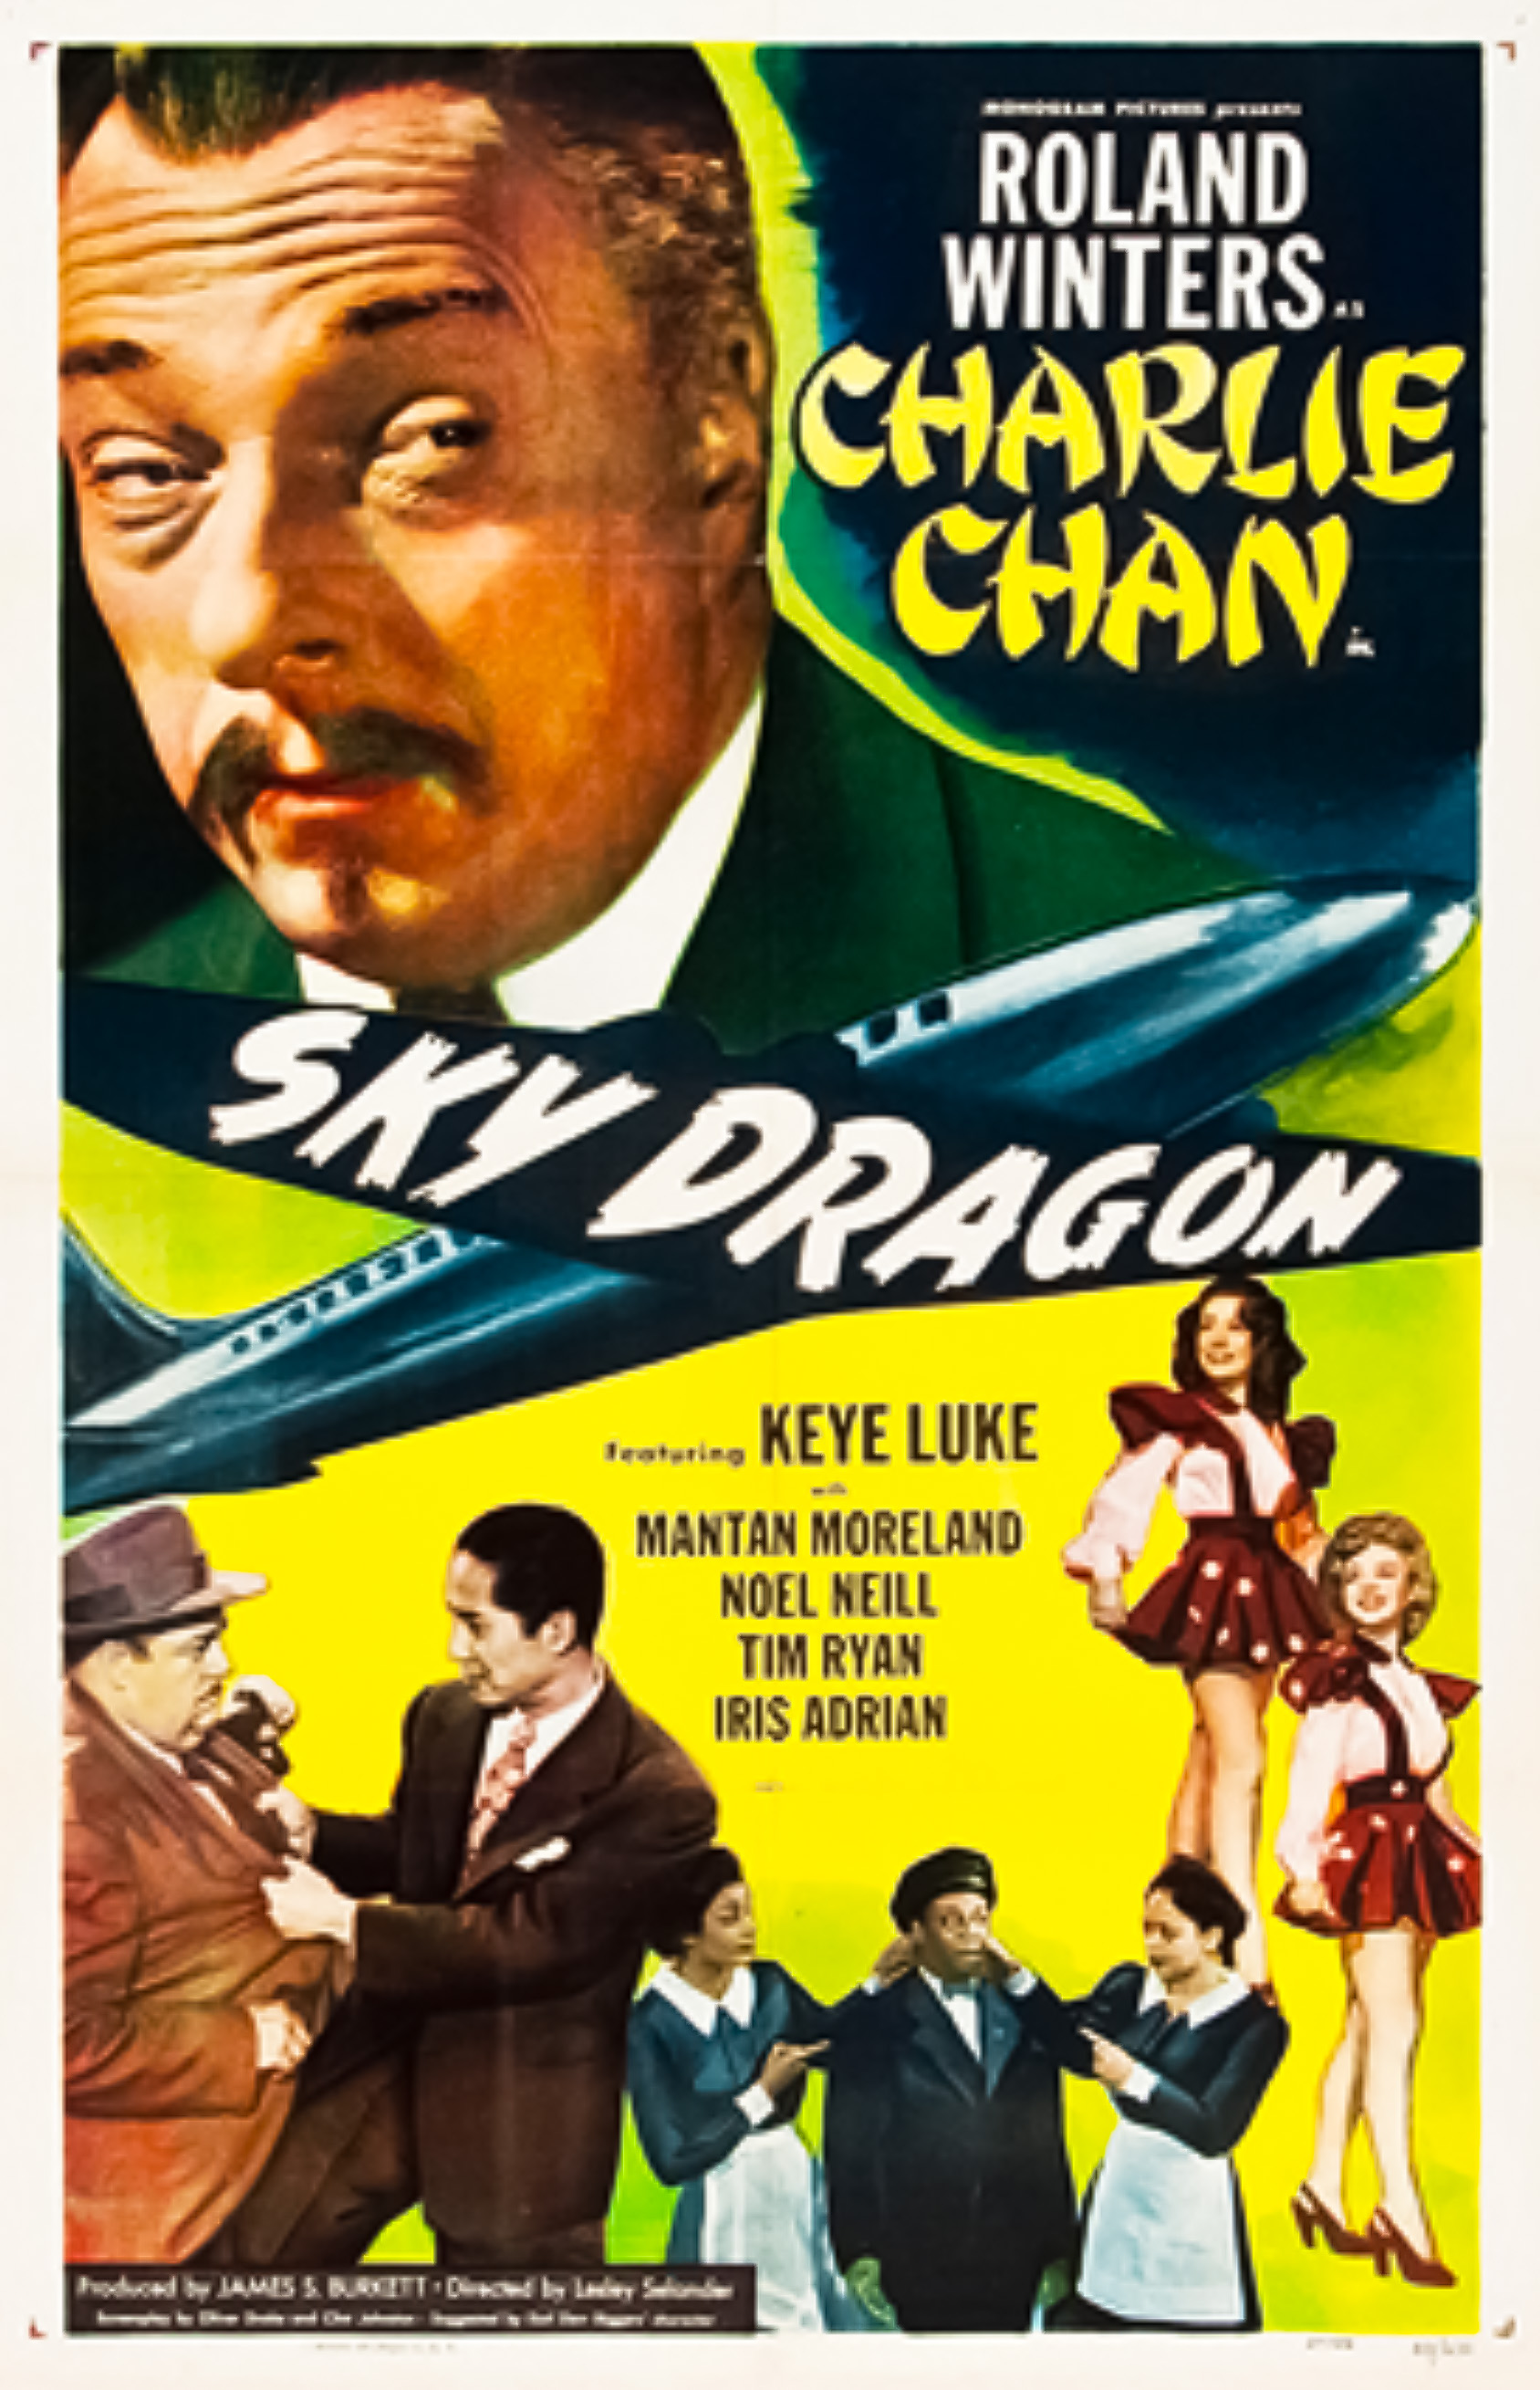 THE SKY DRAGON (1949)